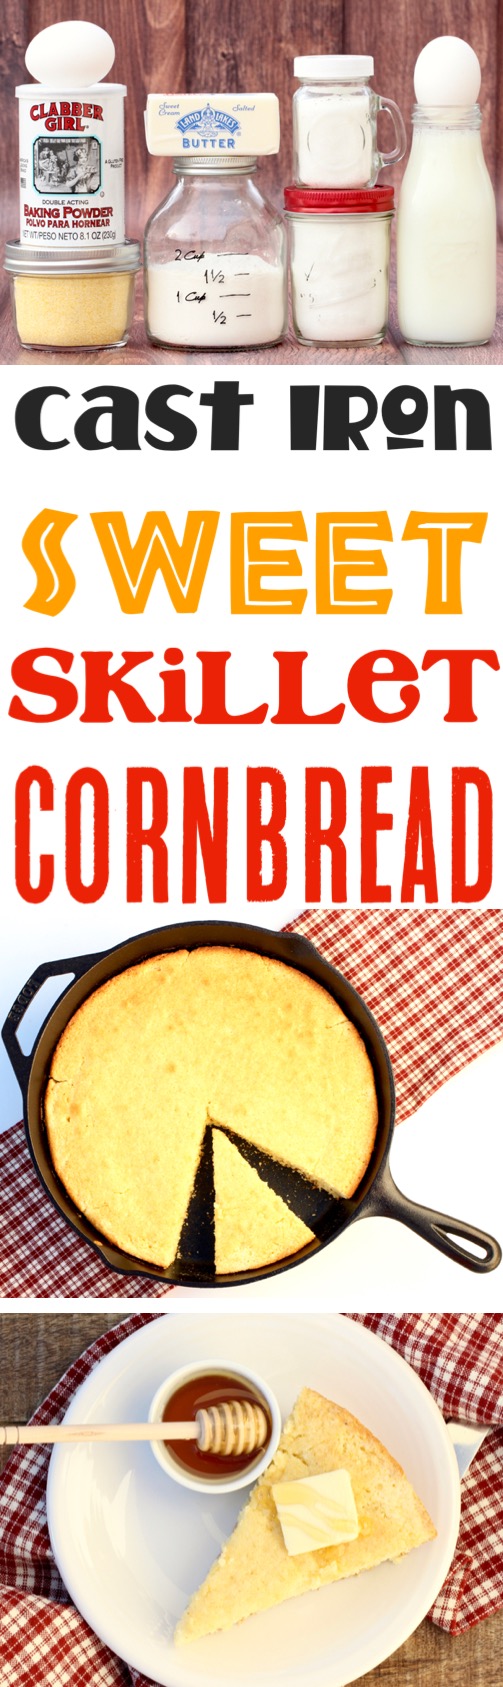 Skillet Cornbread Cast Iron Sweet Recipe